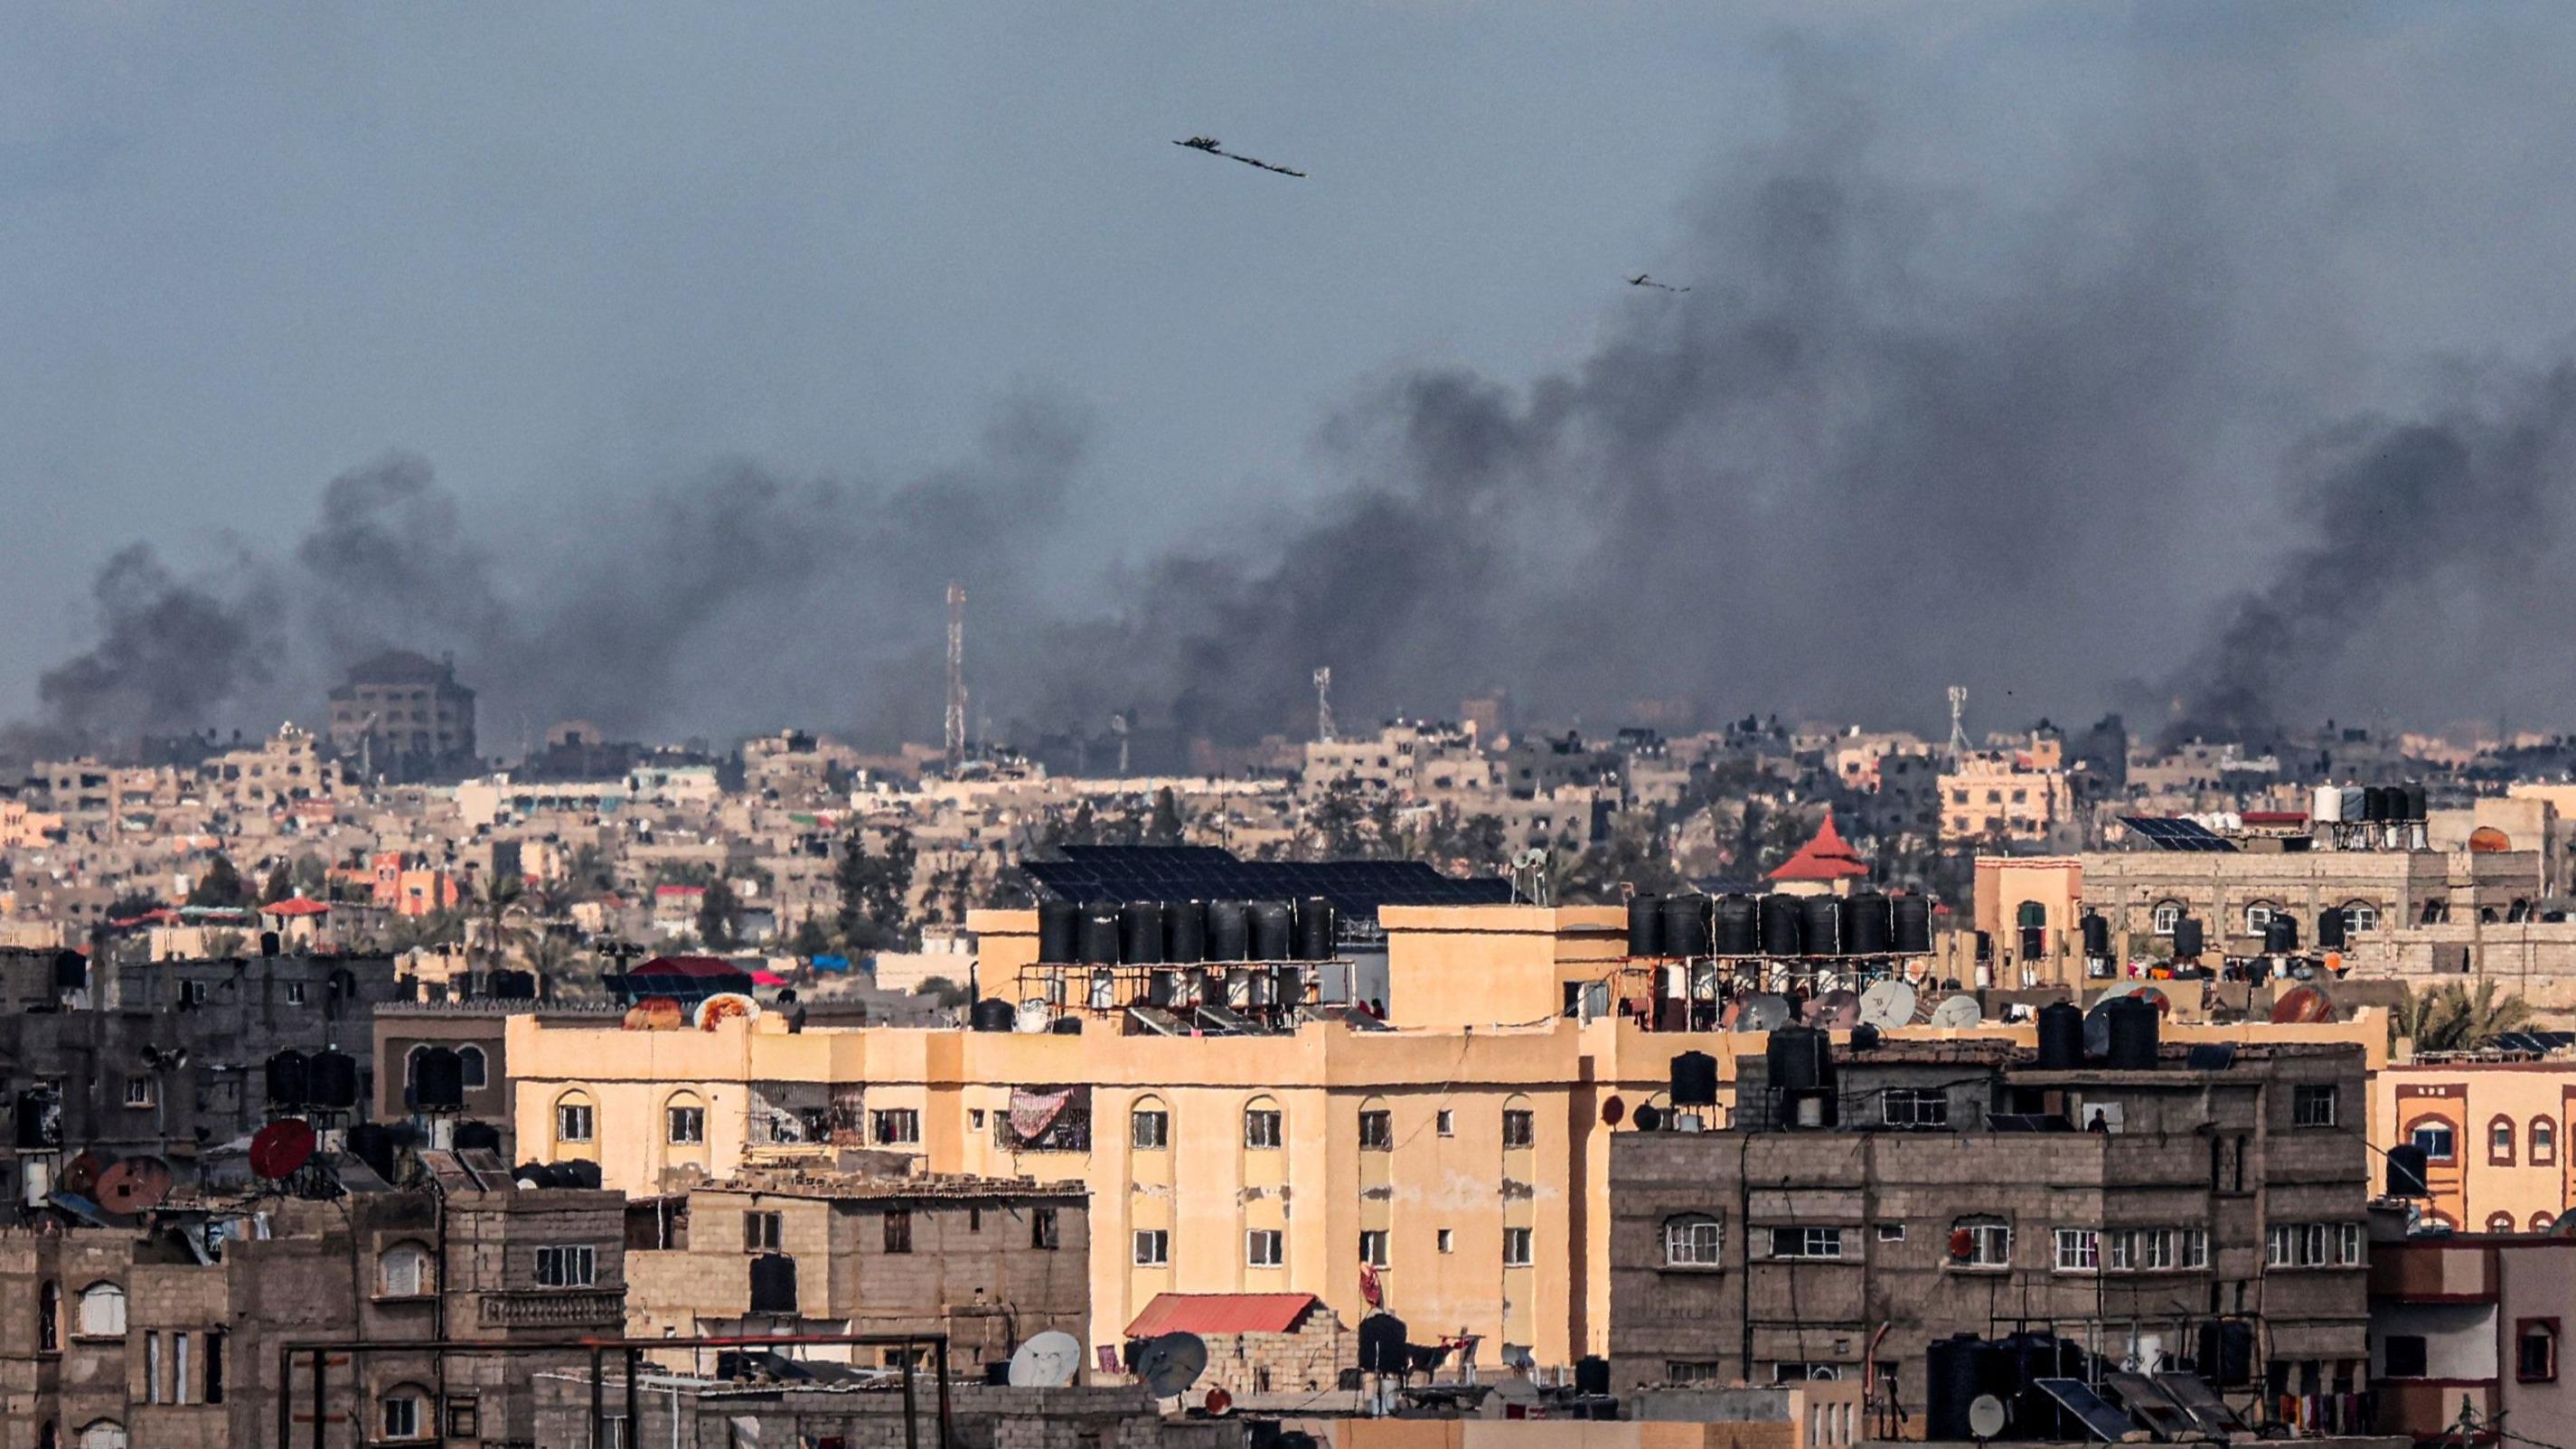 guerre hamas-israël : rafah bombardée, 25 morts selon le hamas